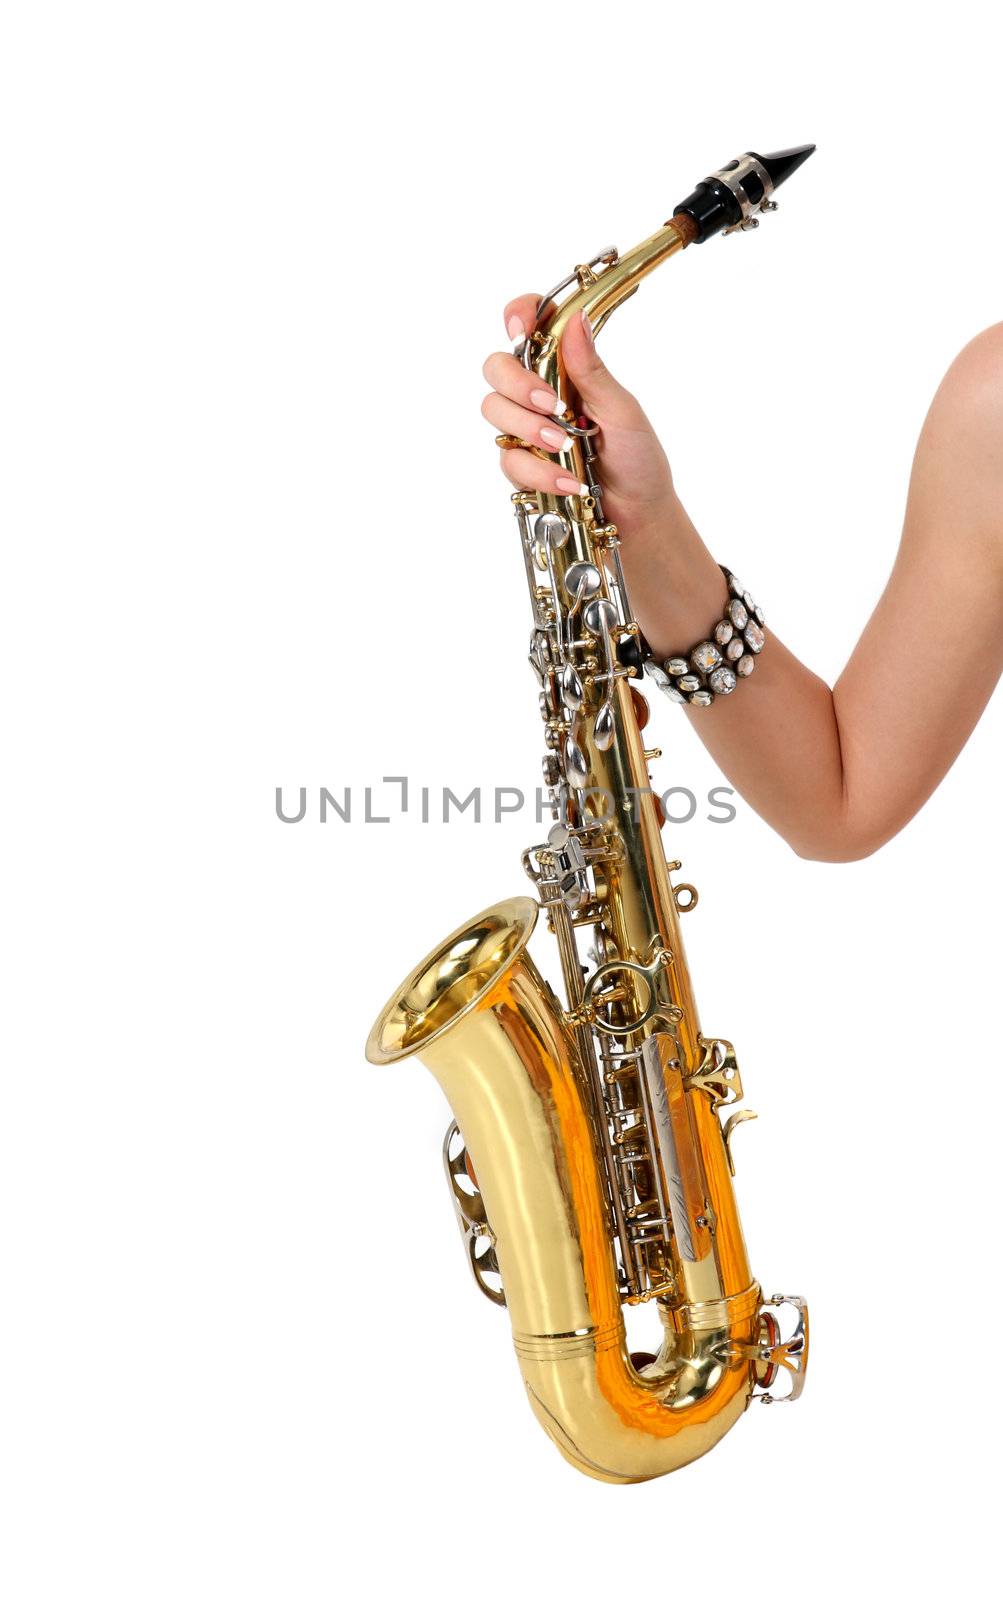 Saxophone in the women's hand by aptyp_kok